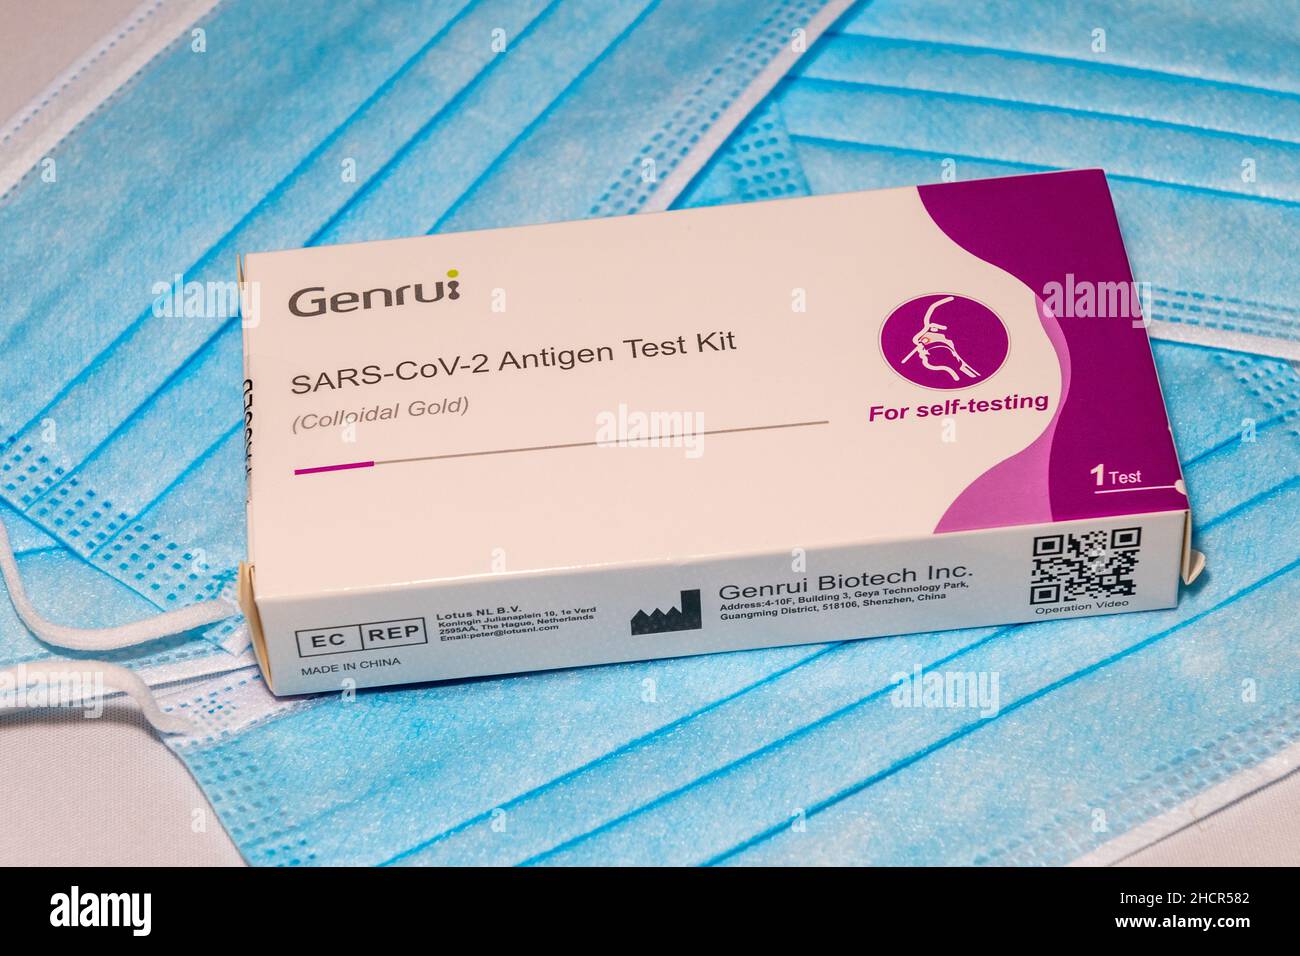 Genrui COVID-19 Antigen test kit placed on face masks. Stock Photo